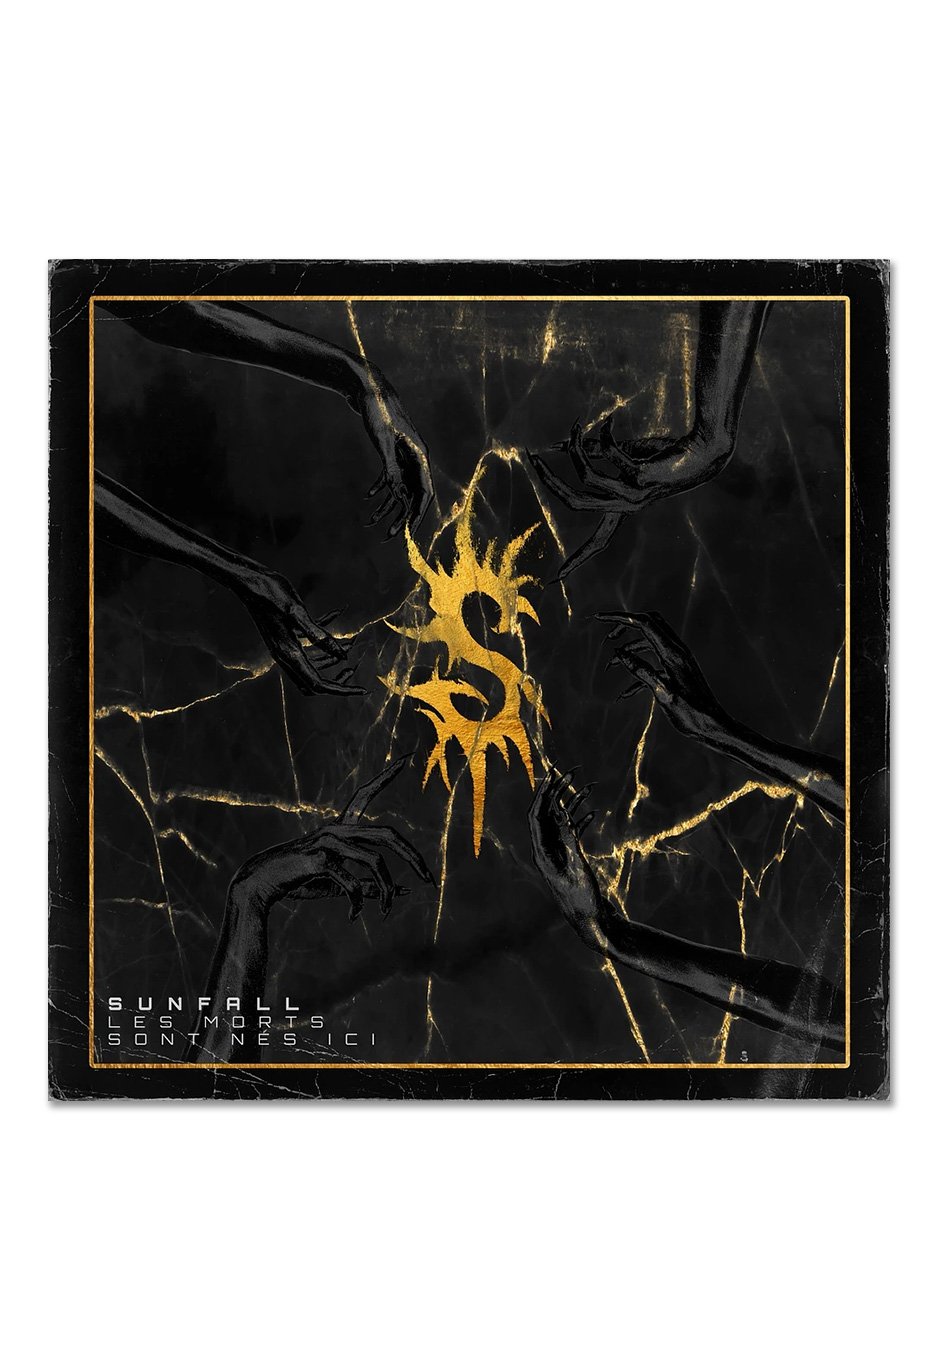 Sunfall - Les Morts Sont Nés Ici Ltd. Yellow/Black - Colored Vinyl